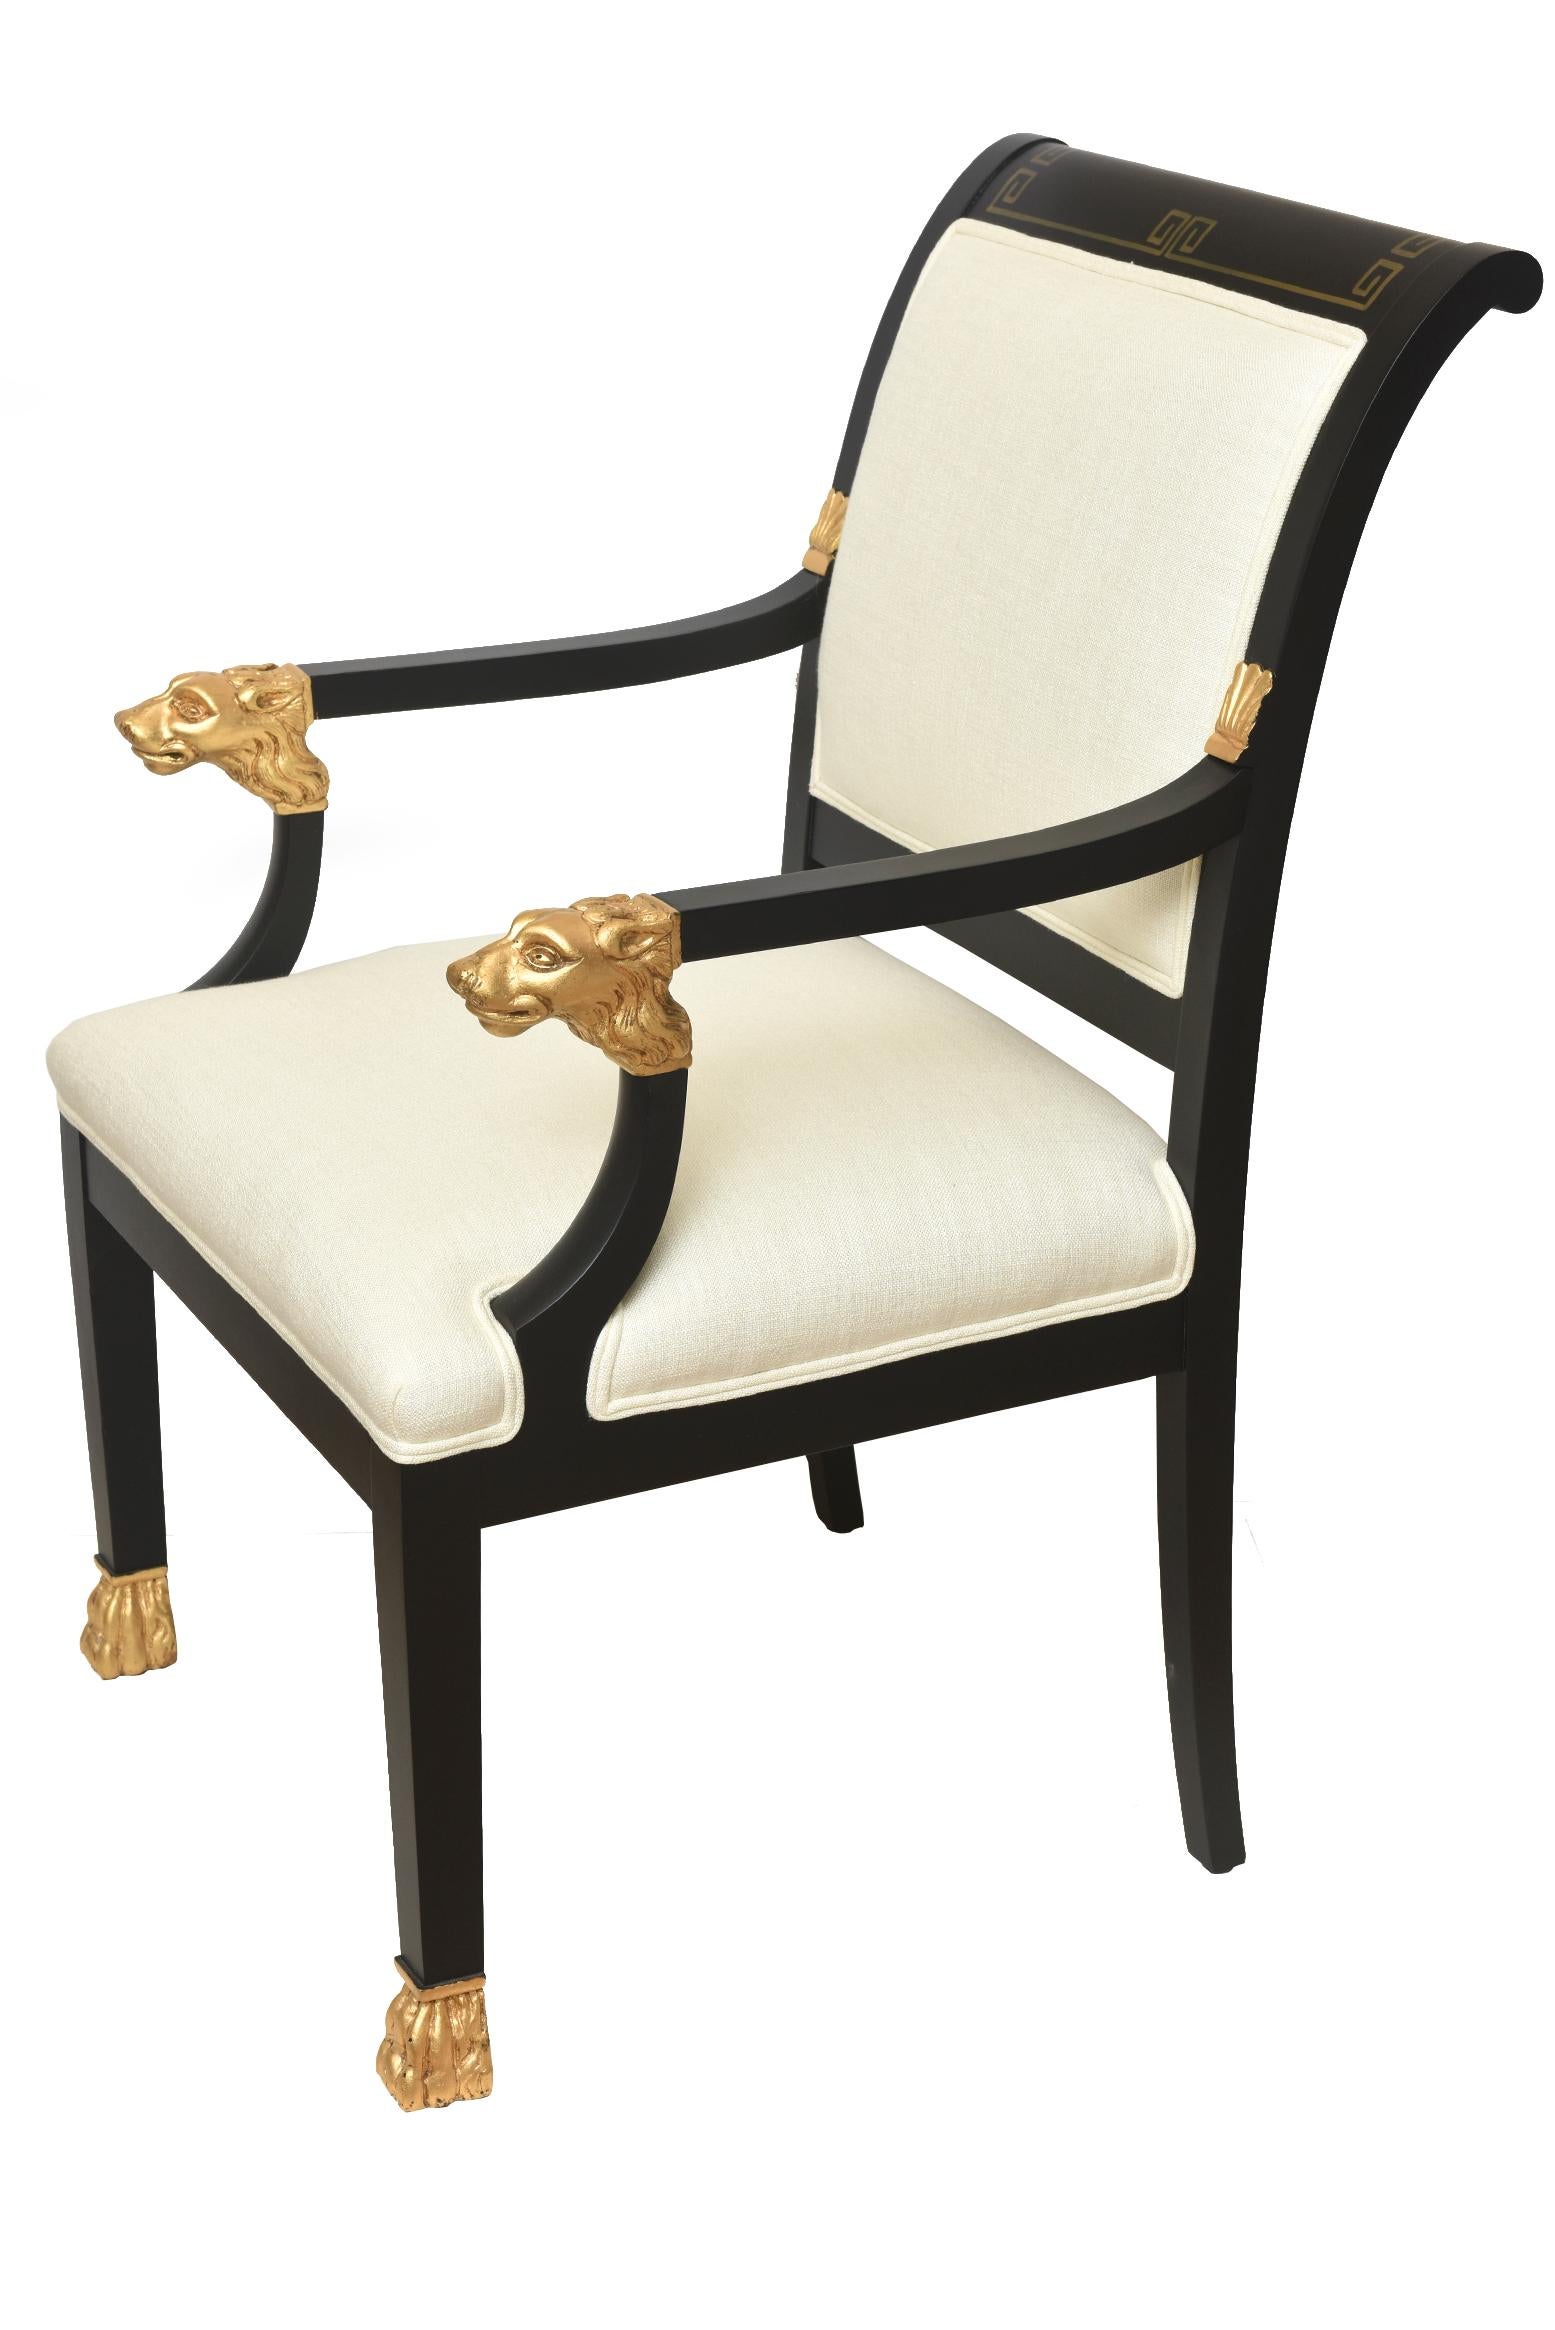 Regency Revival Greek Key and Ram's Head Regency Gold Leafed and Wood Upholstered Side Chair